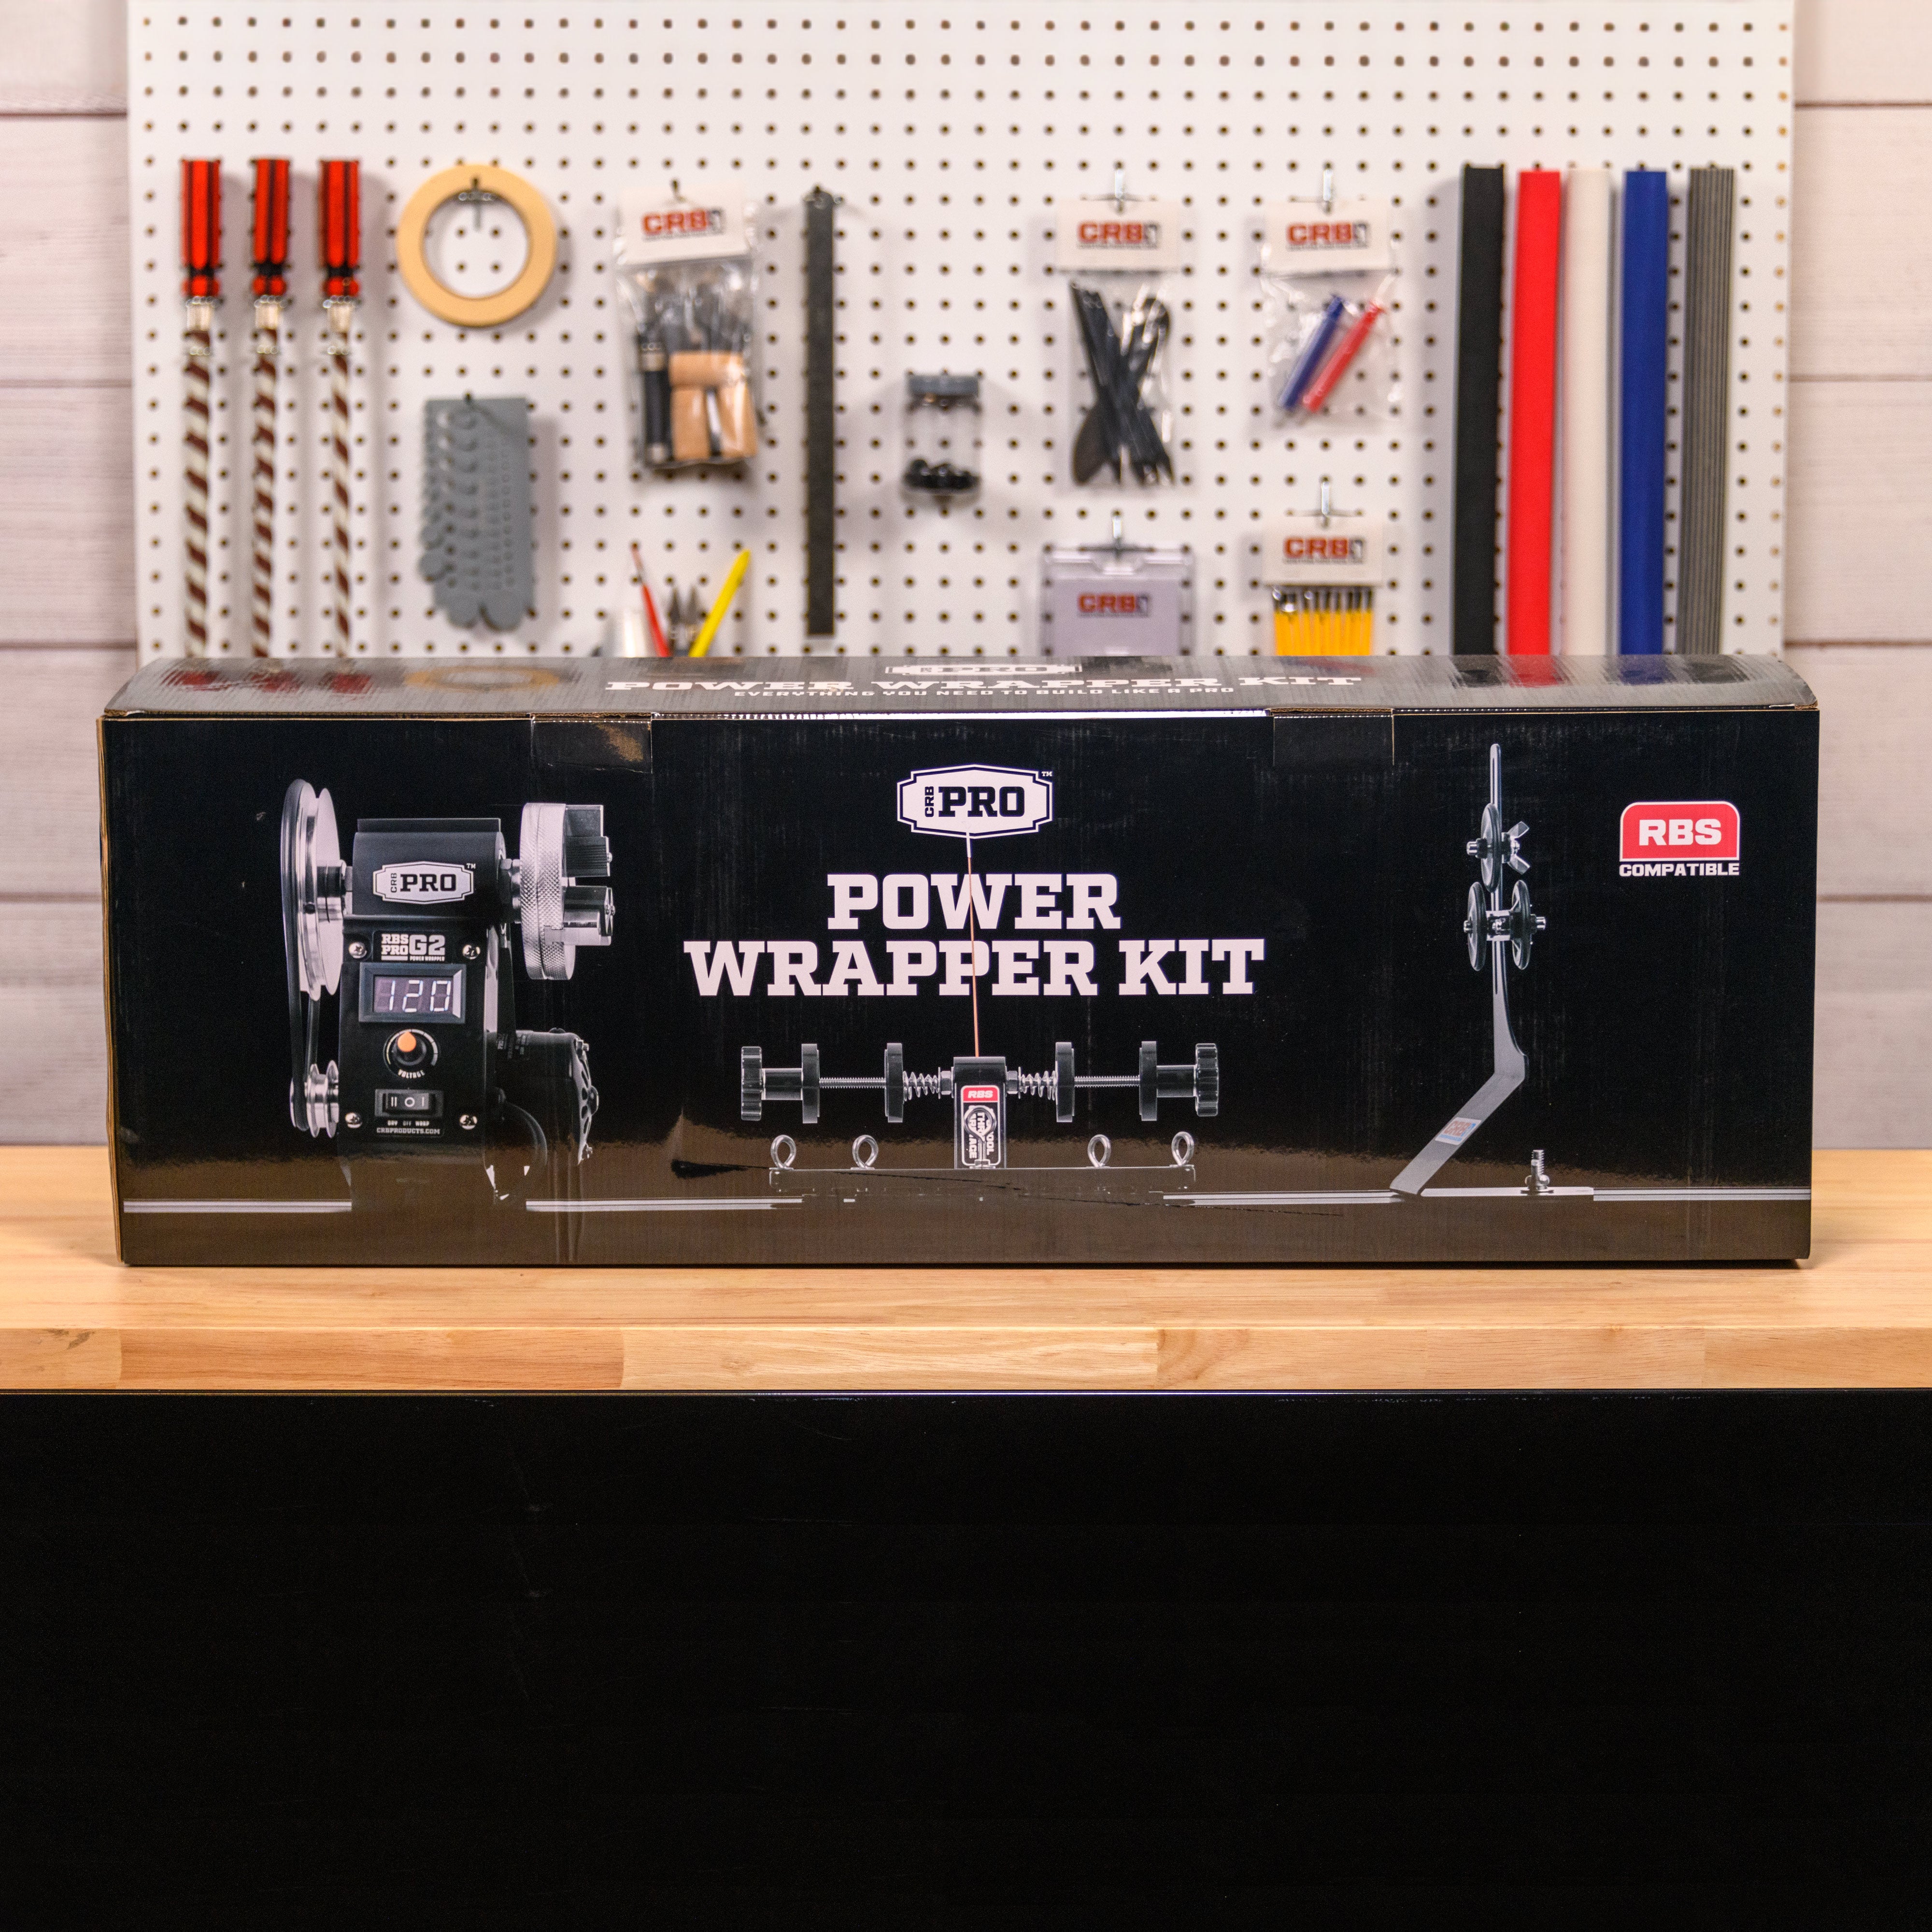 Power Wrapper Kit